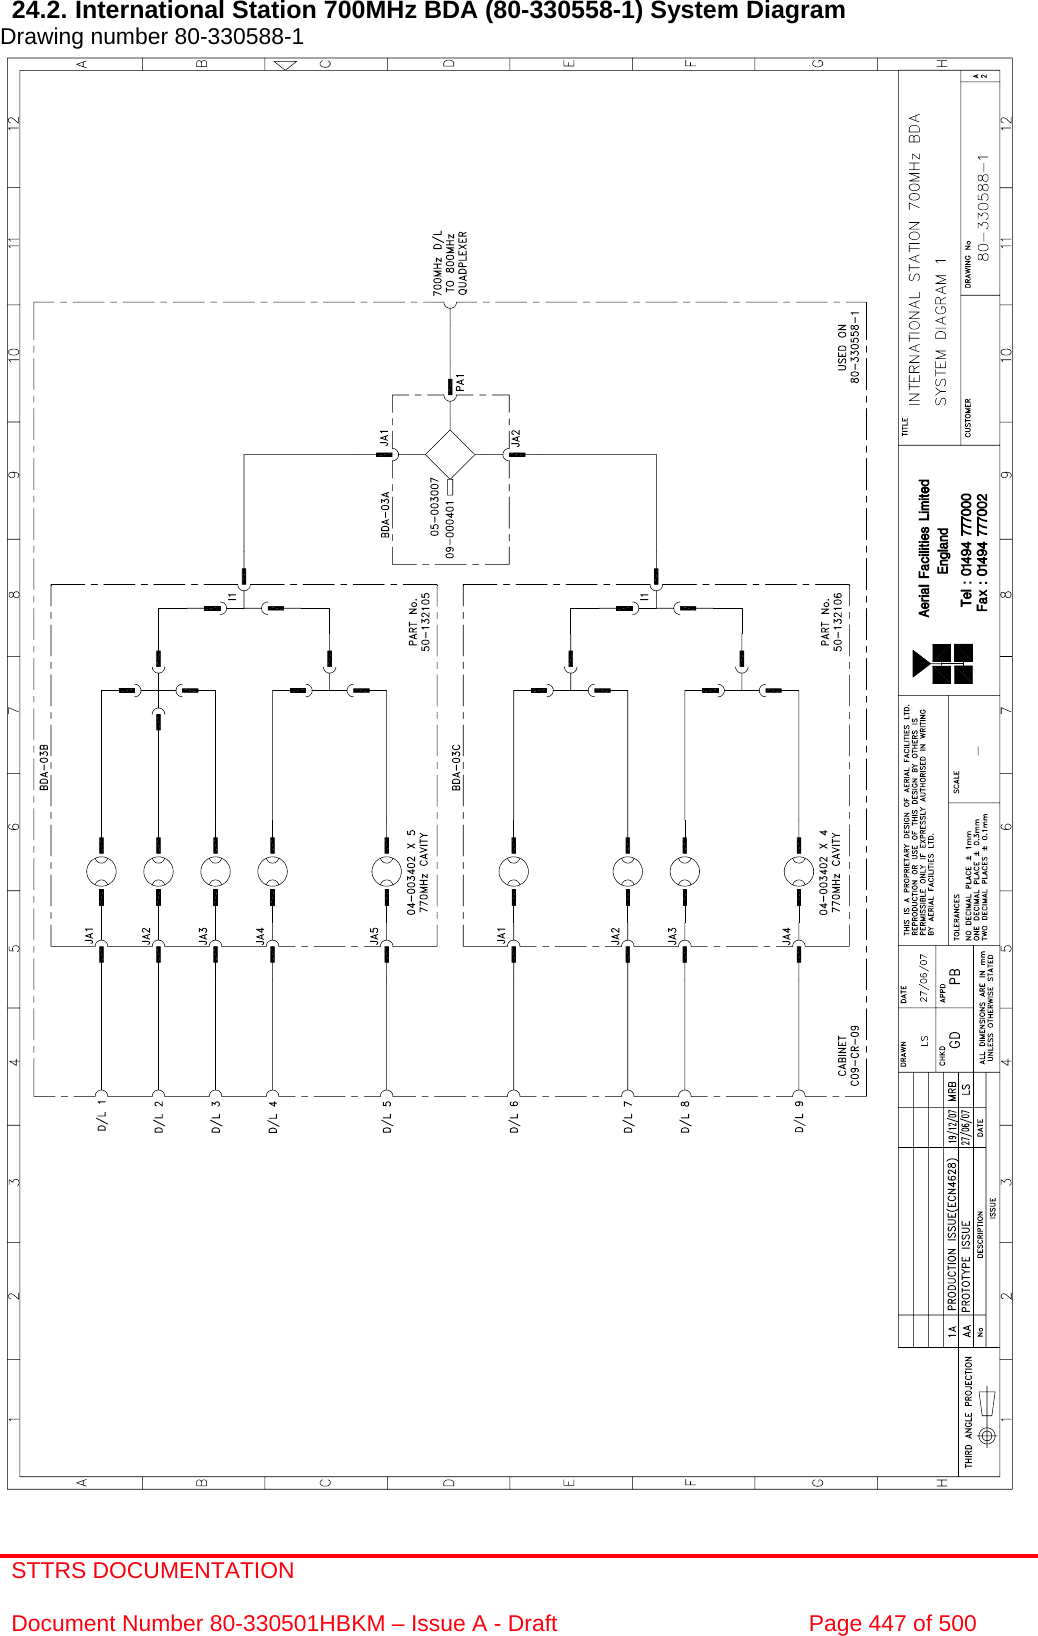 STTRS DOCUMENTATION  Document Number 80-330501HBKM – Issue A - Draft  Page 447 of 500   24.2. International Station 700MHz BDA (80-330558-1) System Diagram  Drawing number 80-330588-1                                                    